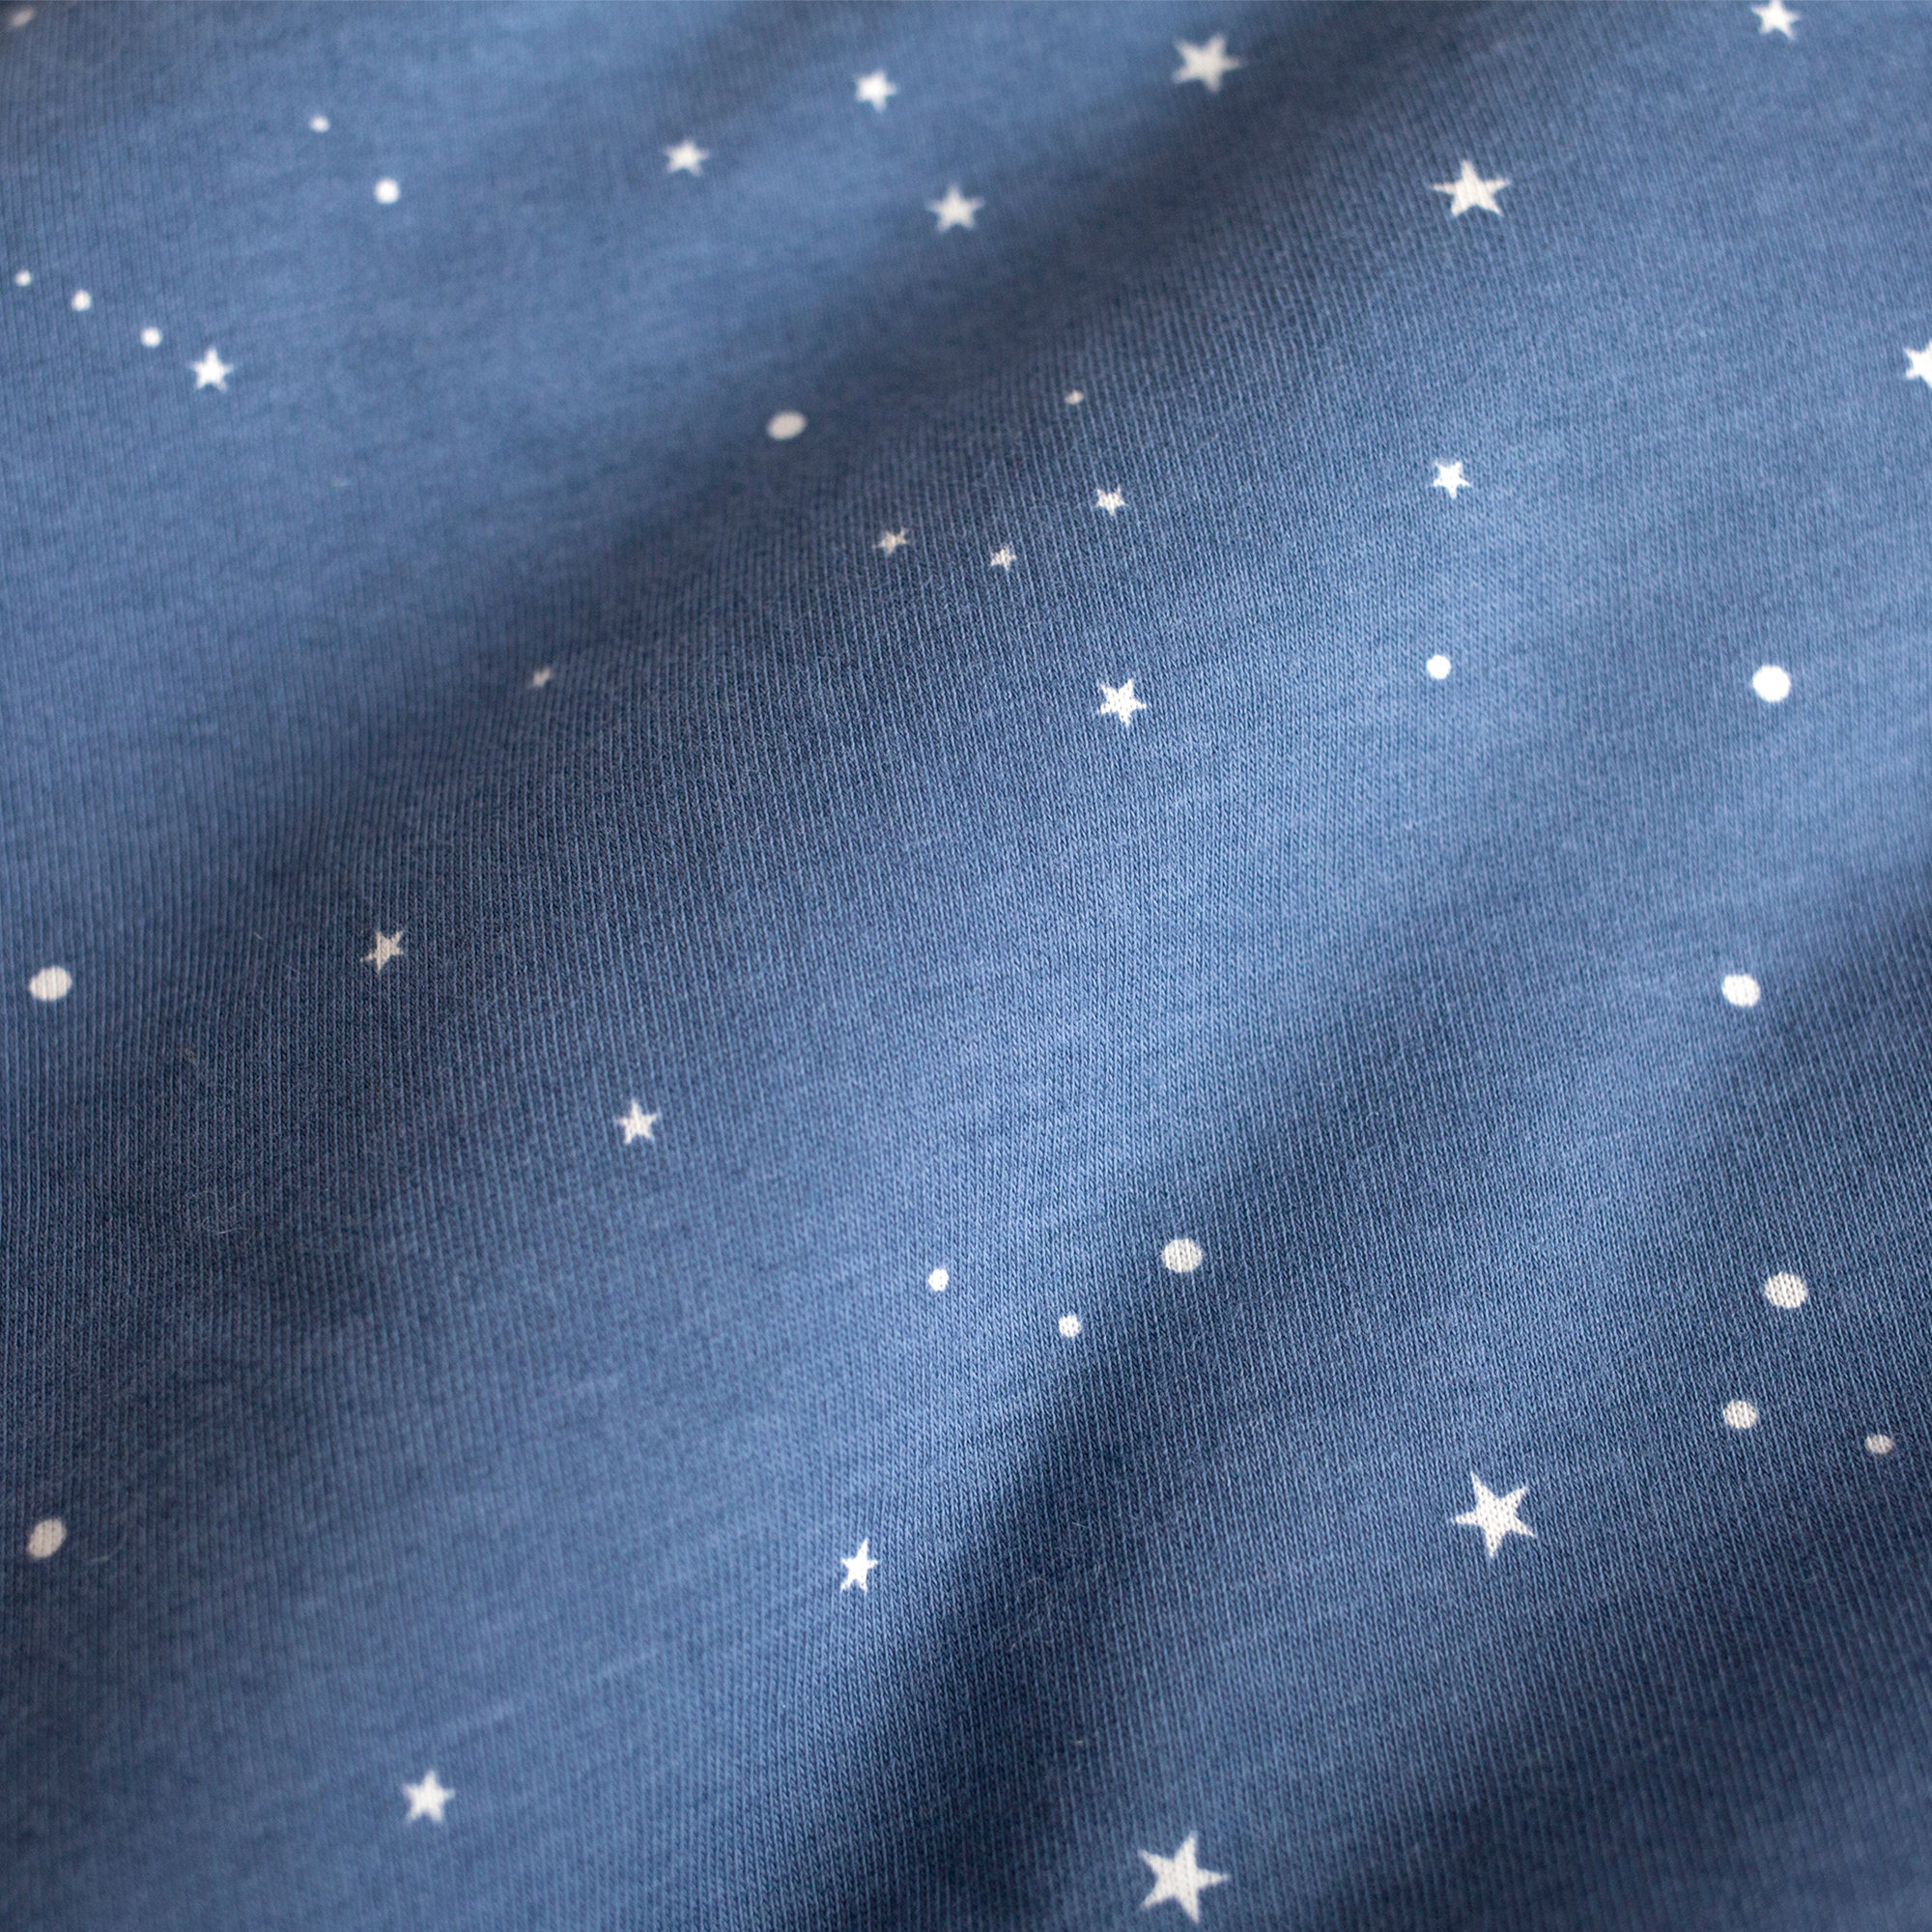 Playpen sheet Jersey 75x95cm STARY Little stars print denim